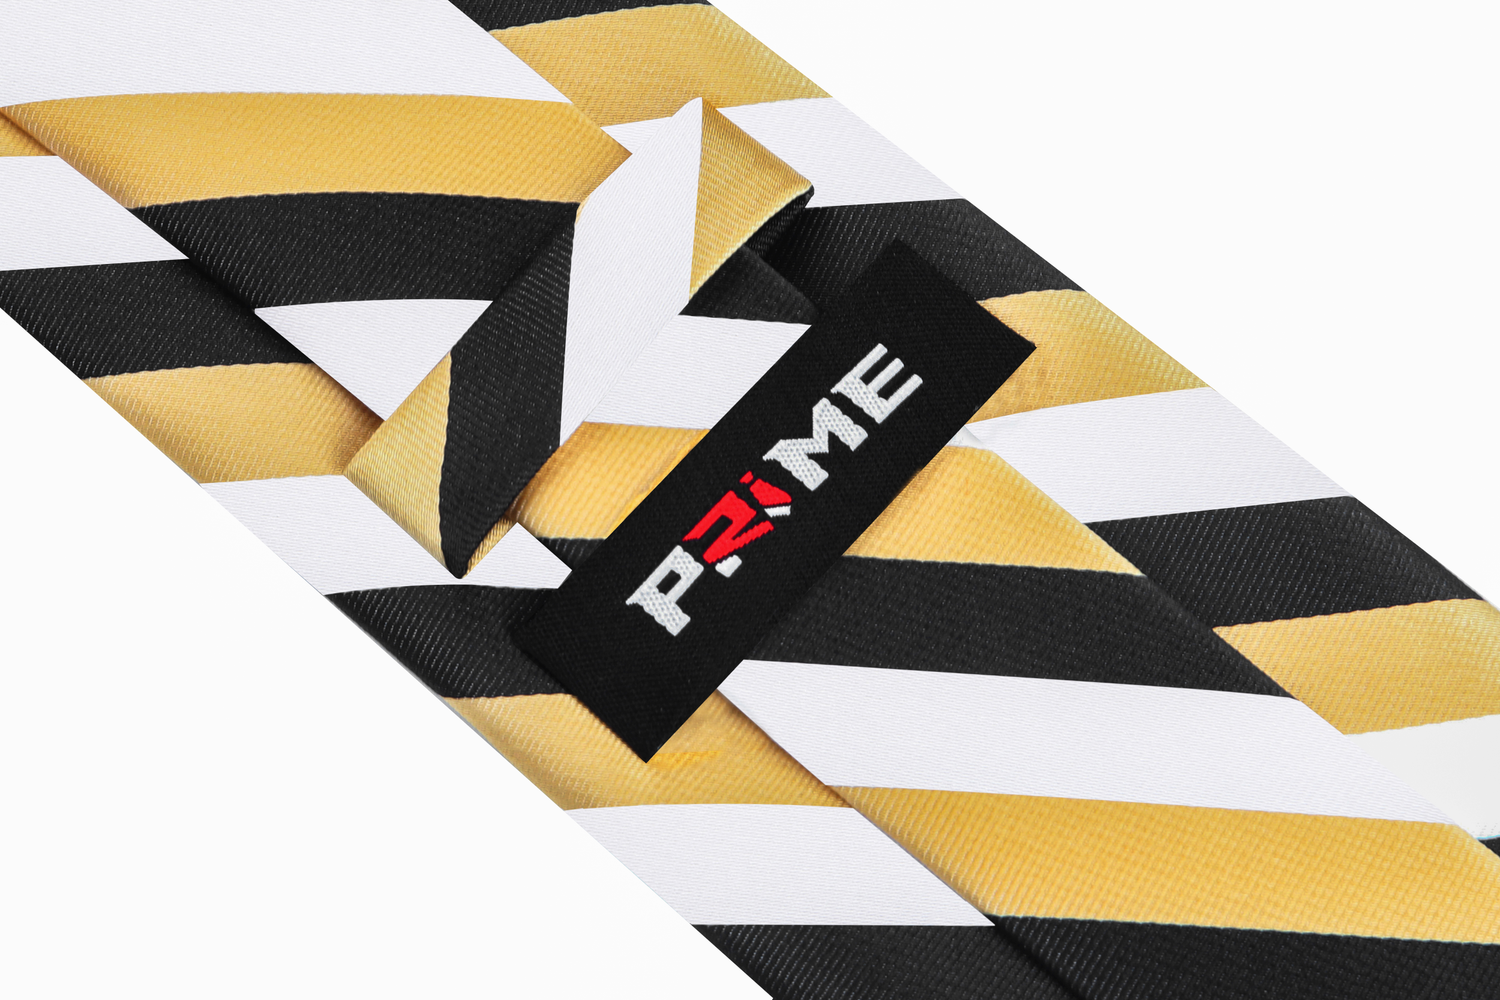 Gold, Black & White Media Day Stripe Necktie